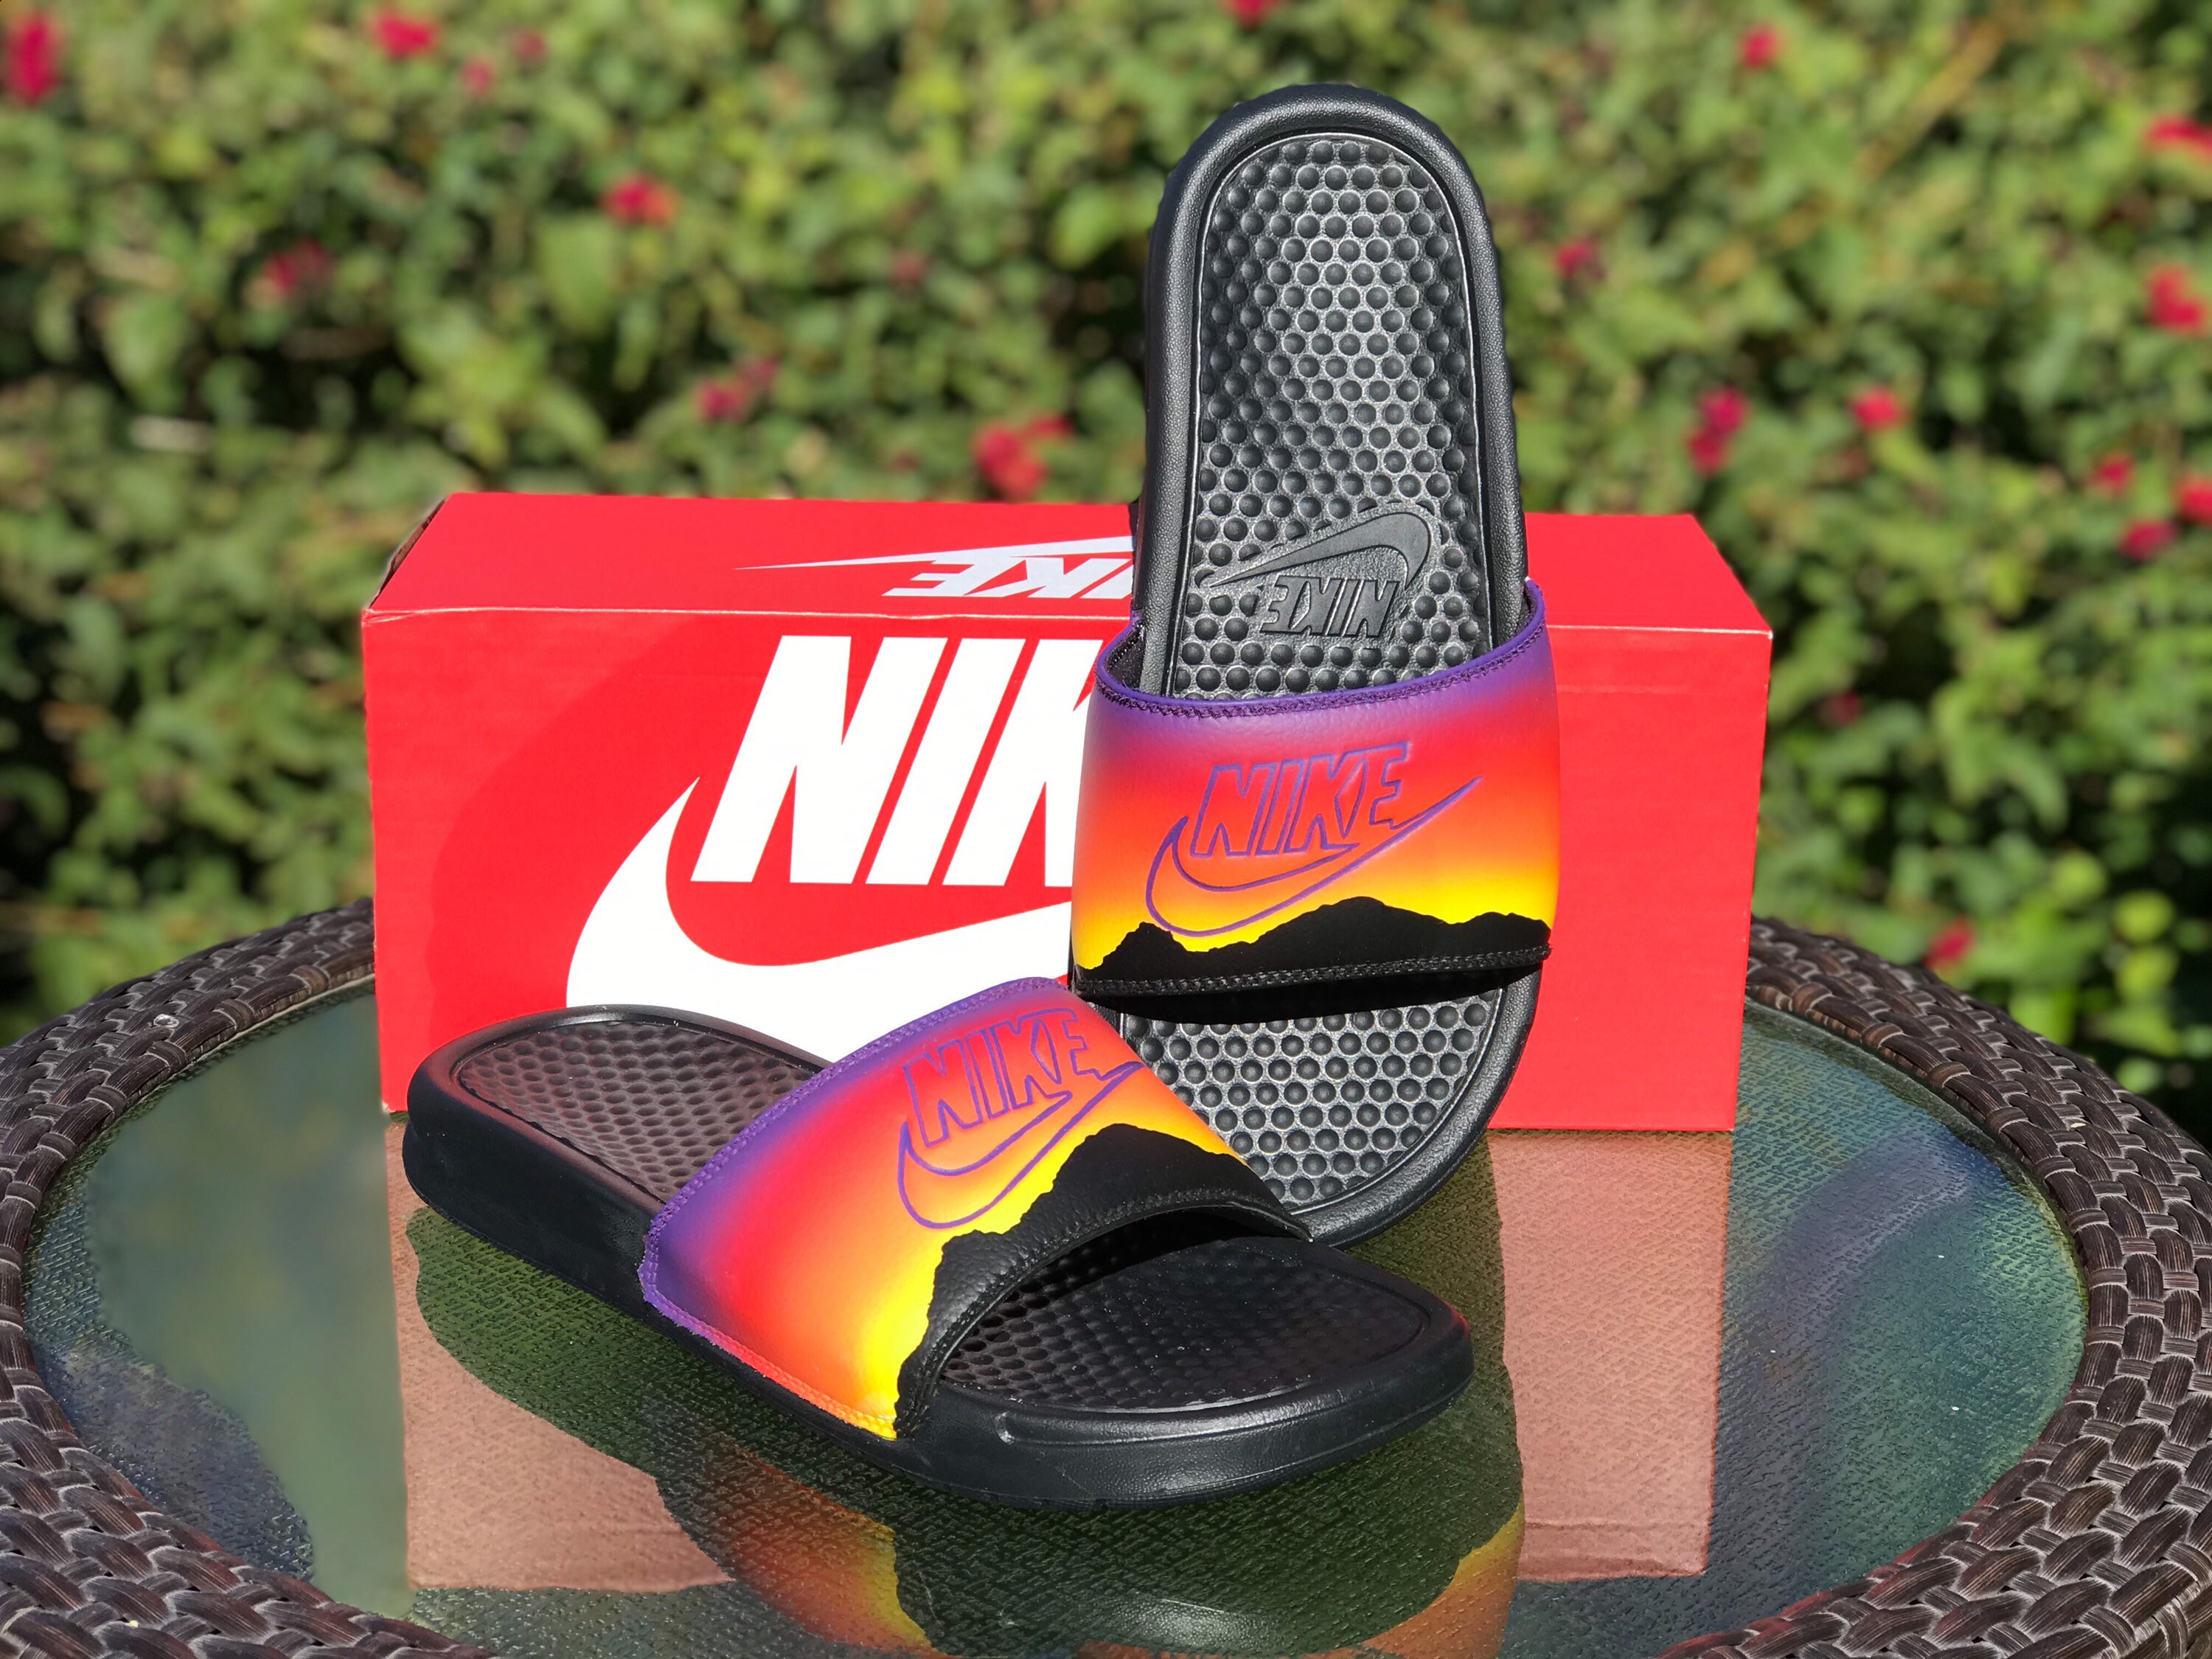 Custom Nike Slides for Sale in Dallas, TX - OfferUp